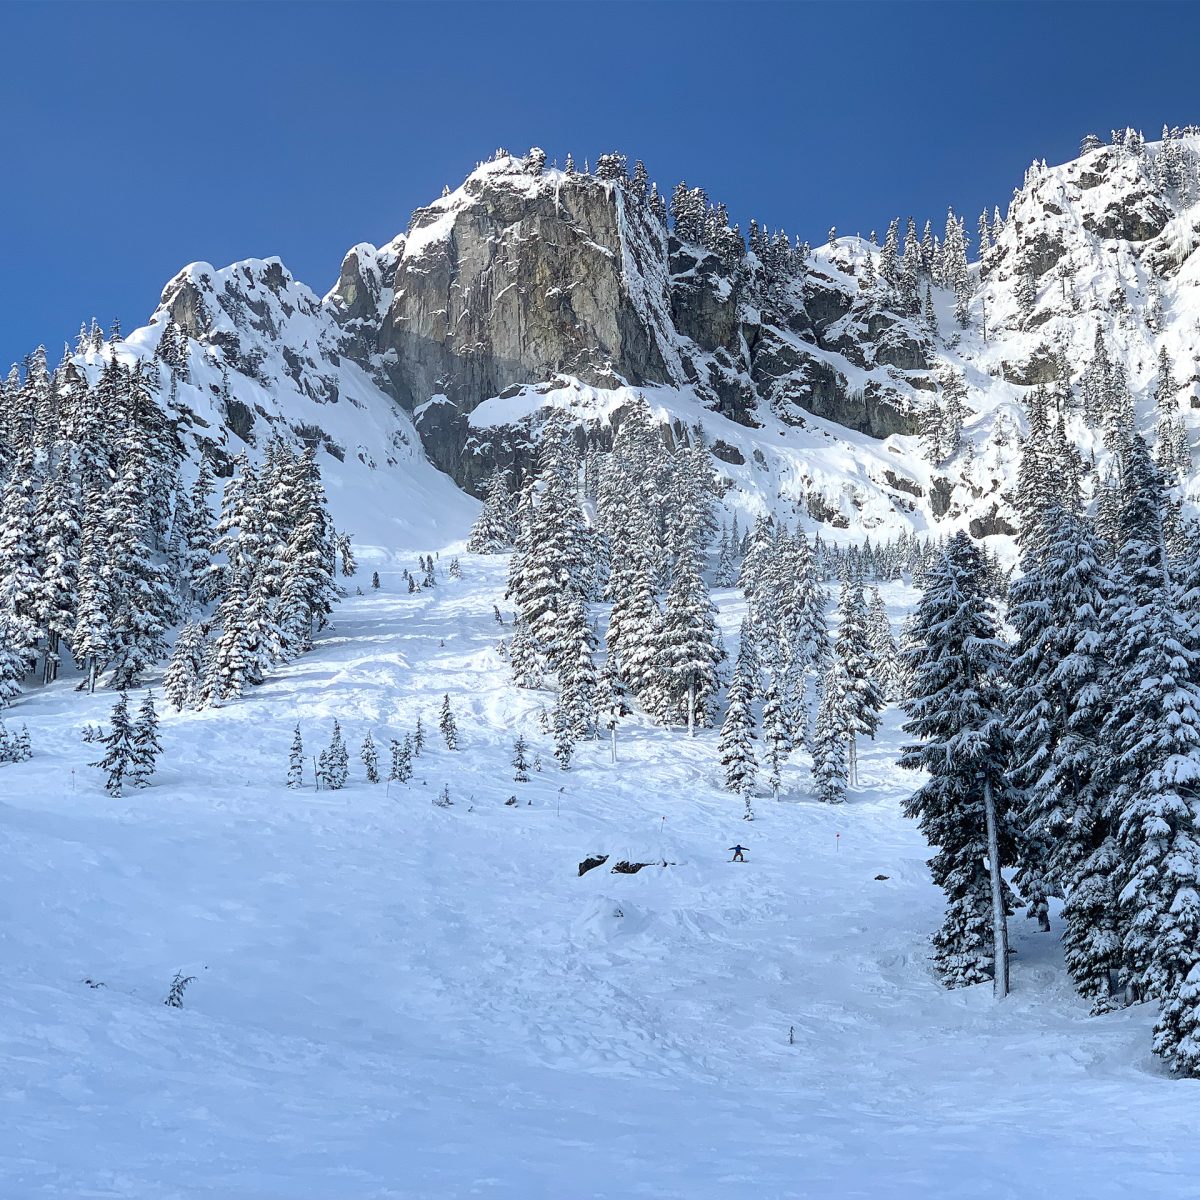 Alpental - The Ultimate Snoqualmie?